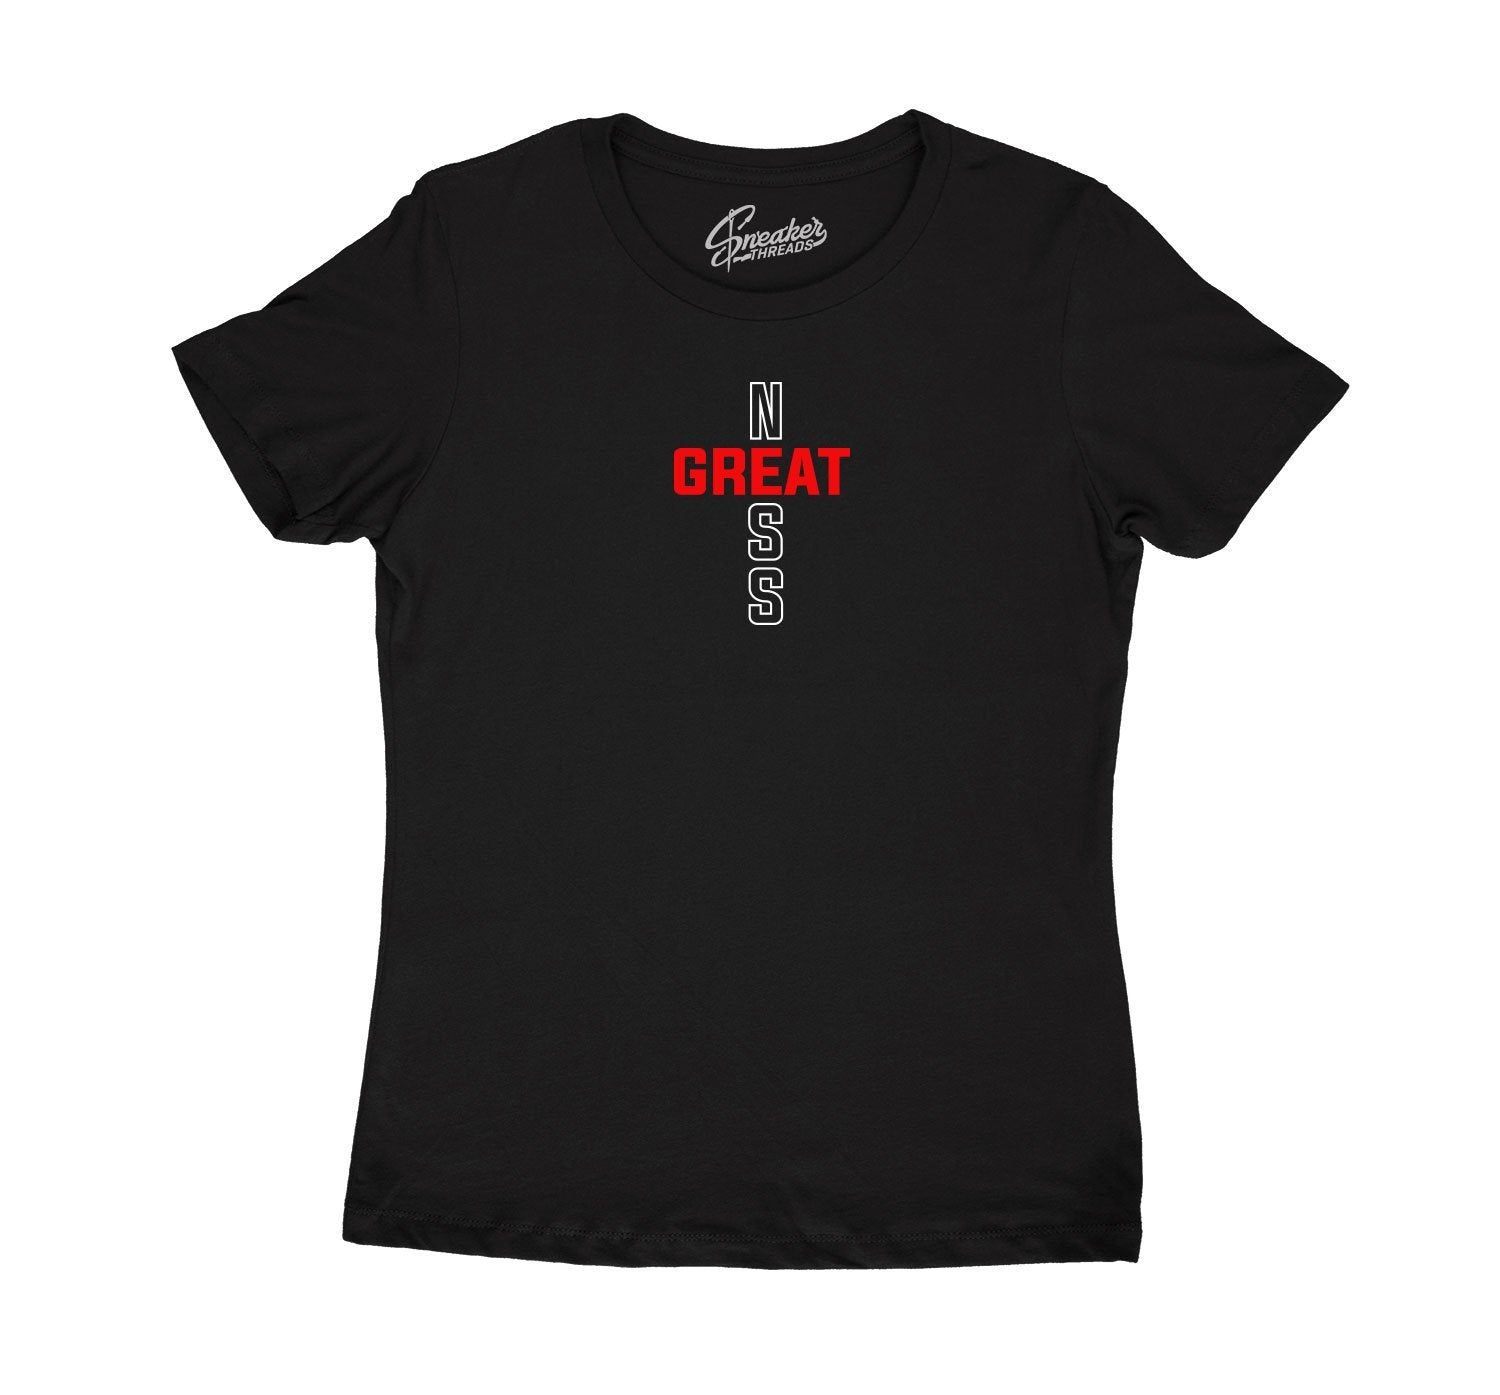 Jordan 11 Bred Greatness Cross Women sneaker shirt